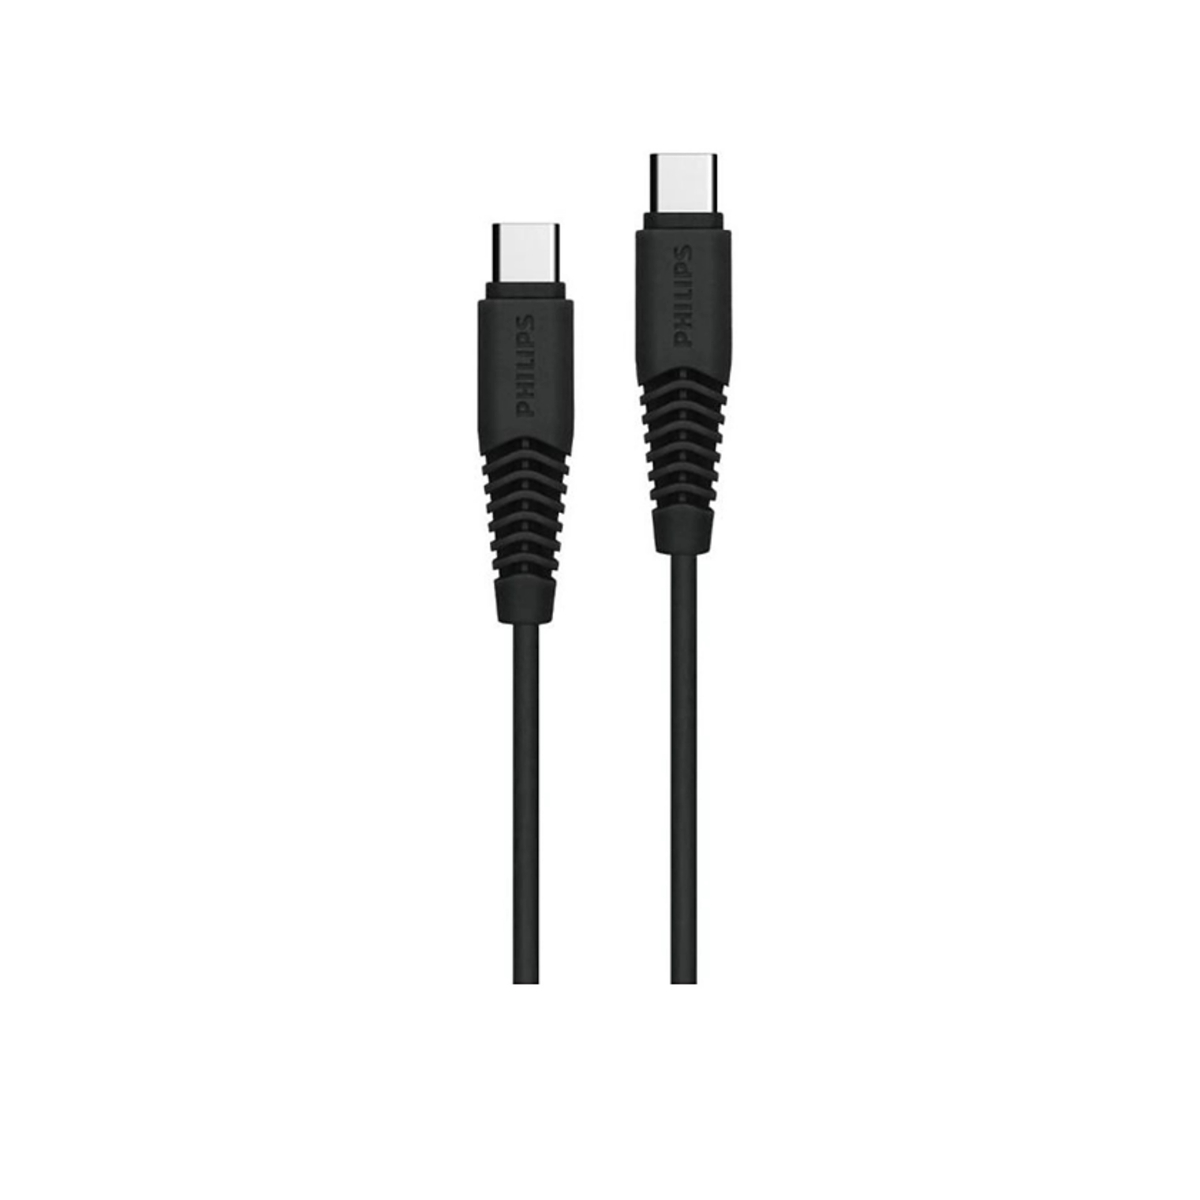 Philips USB-C to USB-C Cable, 1.2 m, Black, DLC5531CB/97